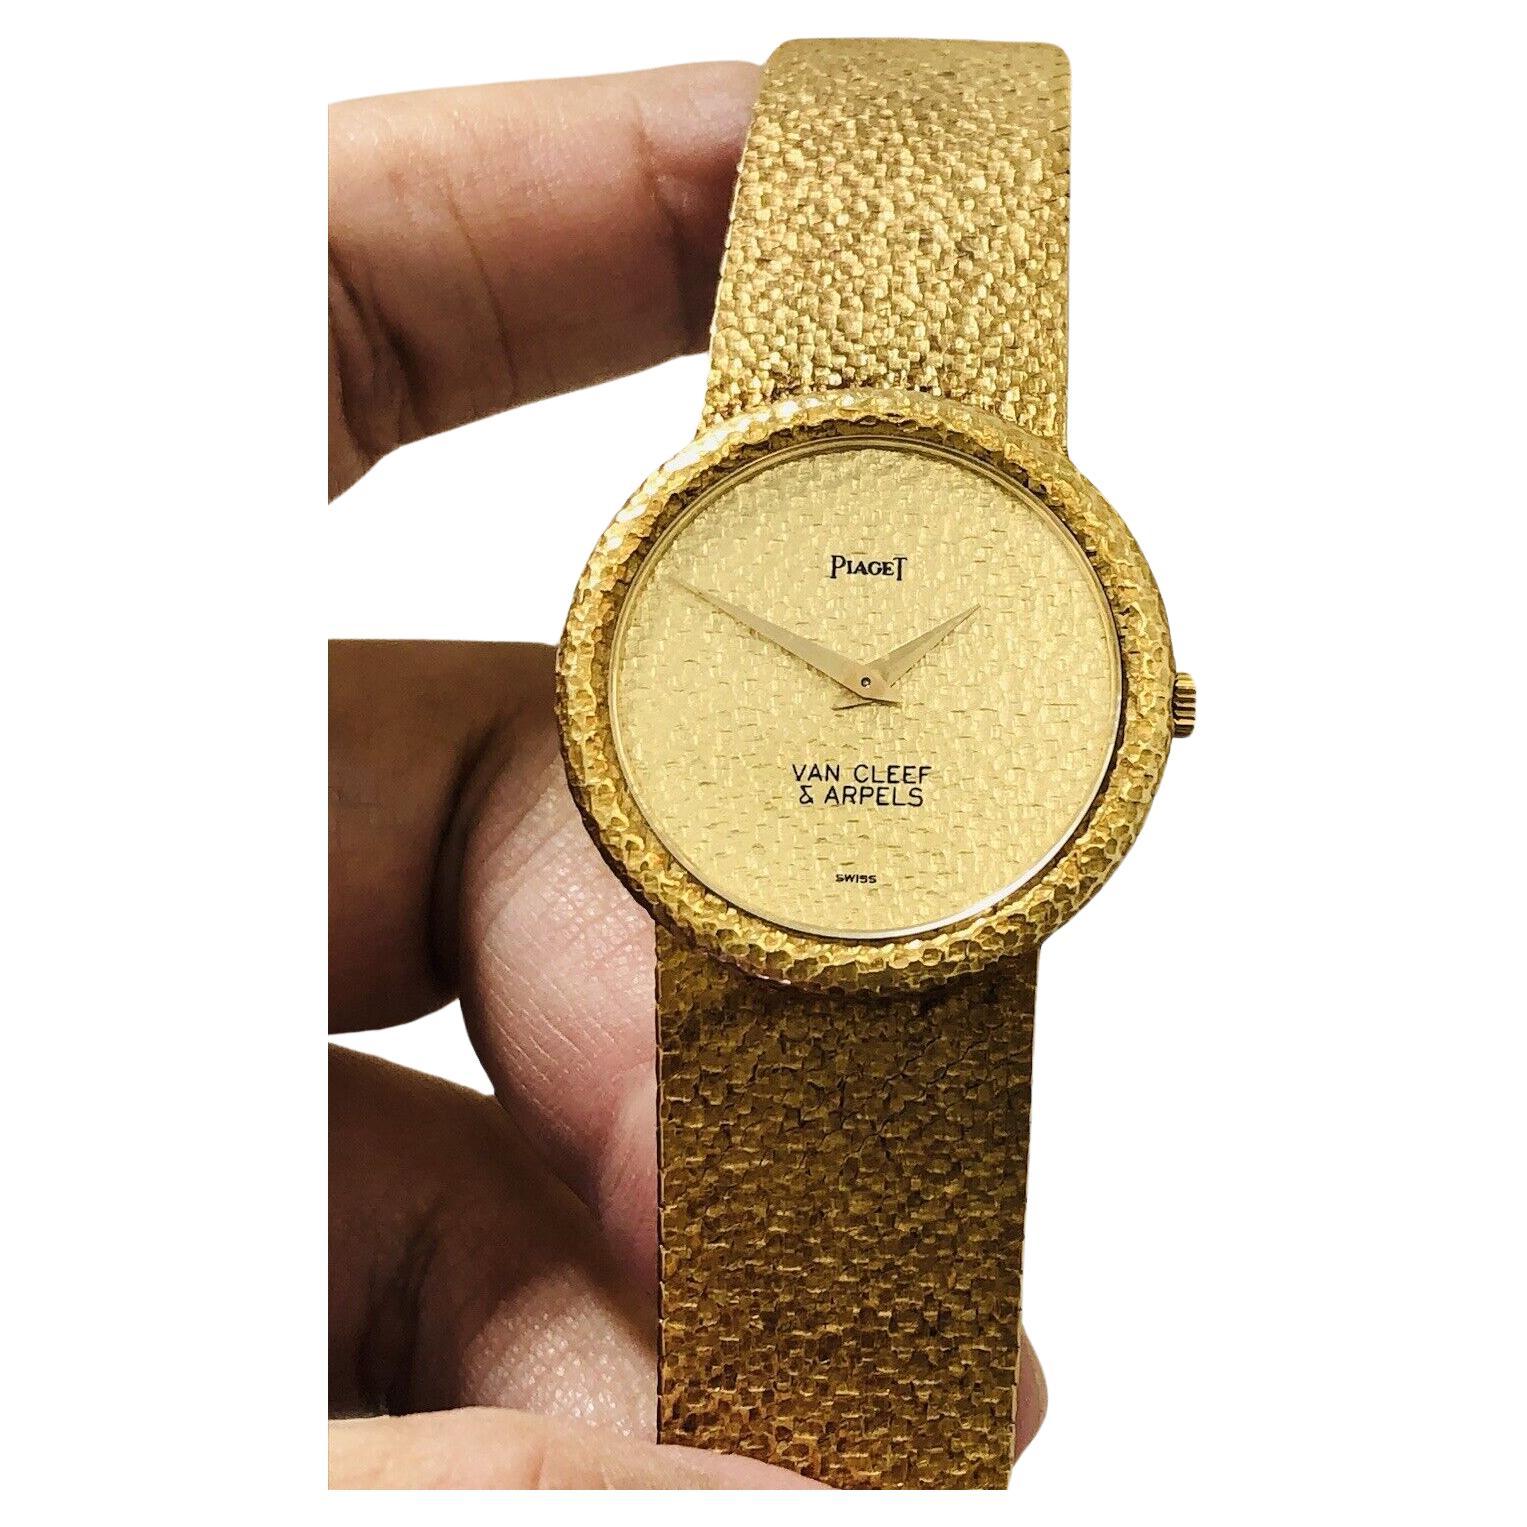 VAN CLEEF & ARPELS PIAGET 18k Yellow Gold Watch Circa 1970s Men's Size For Sale